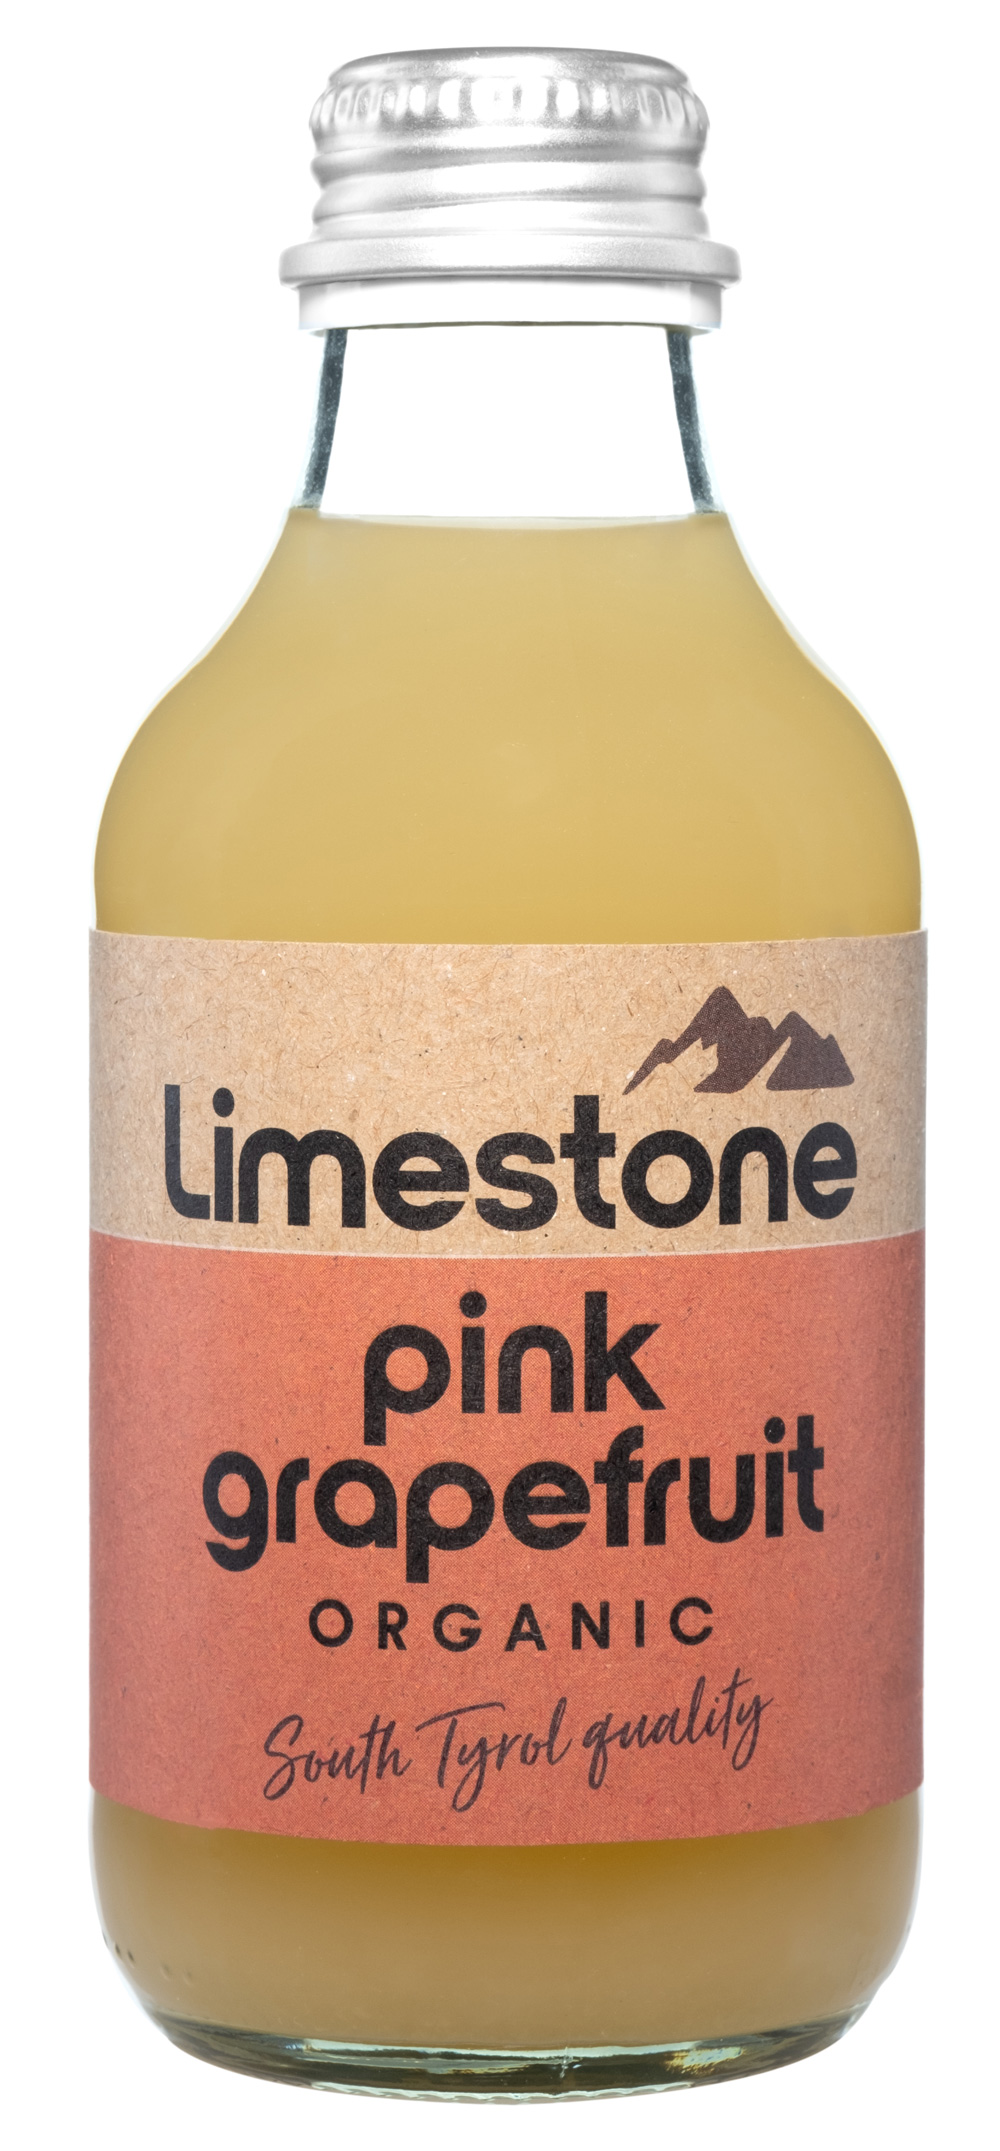 Limestone pink grapefruit Organic alkoholfrei BIO